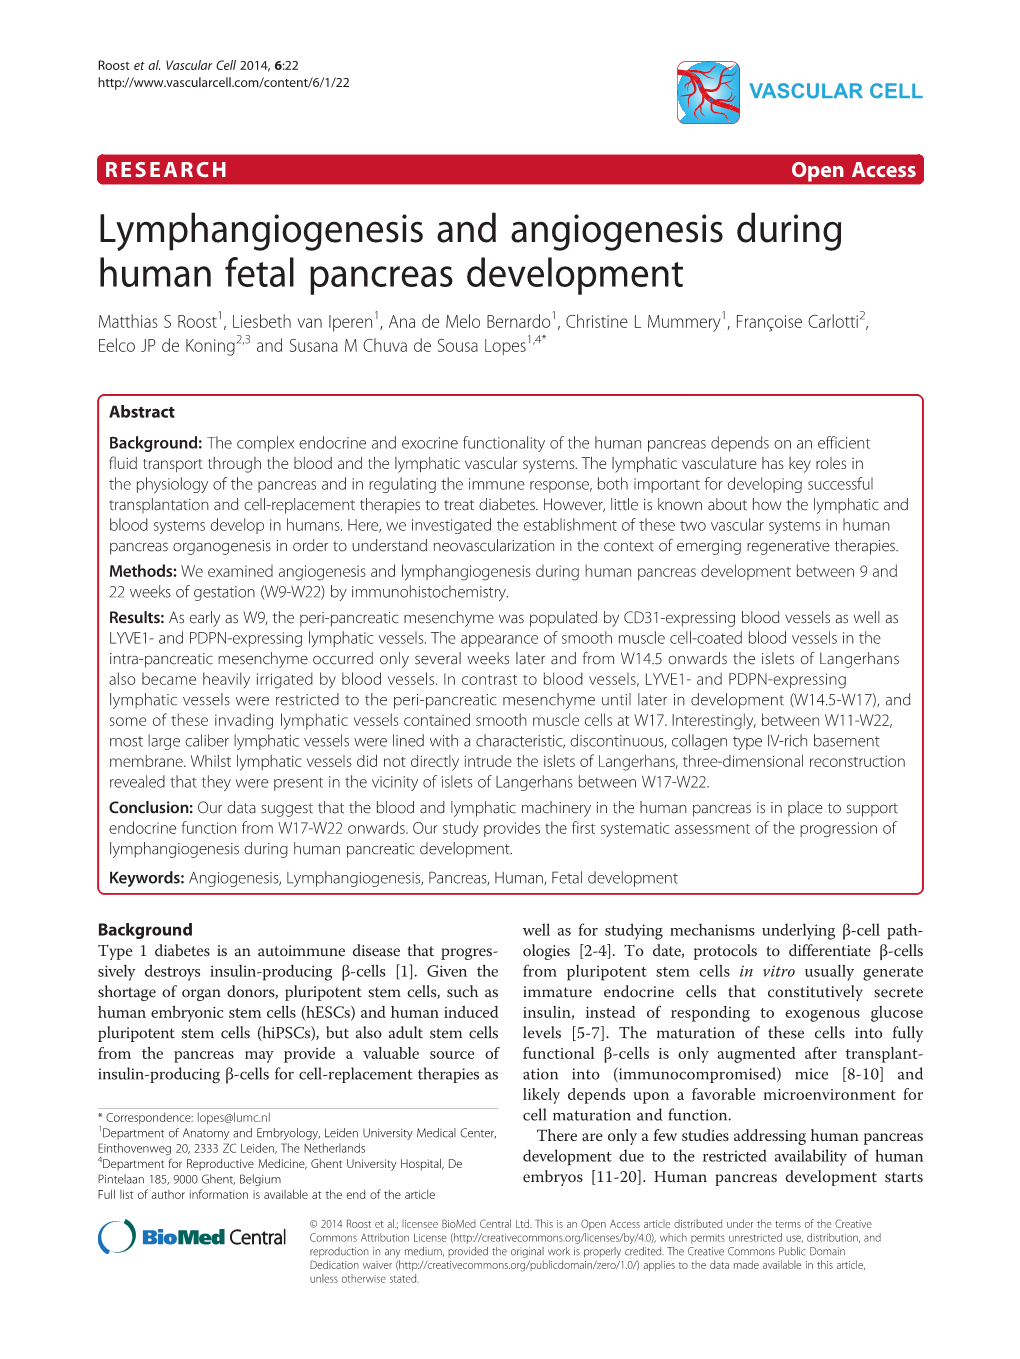 Lymphangiogenesis and Angiogenesis During Human Fetal